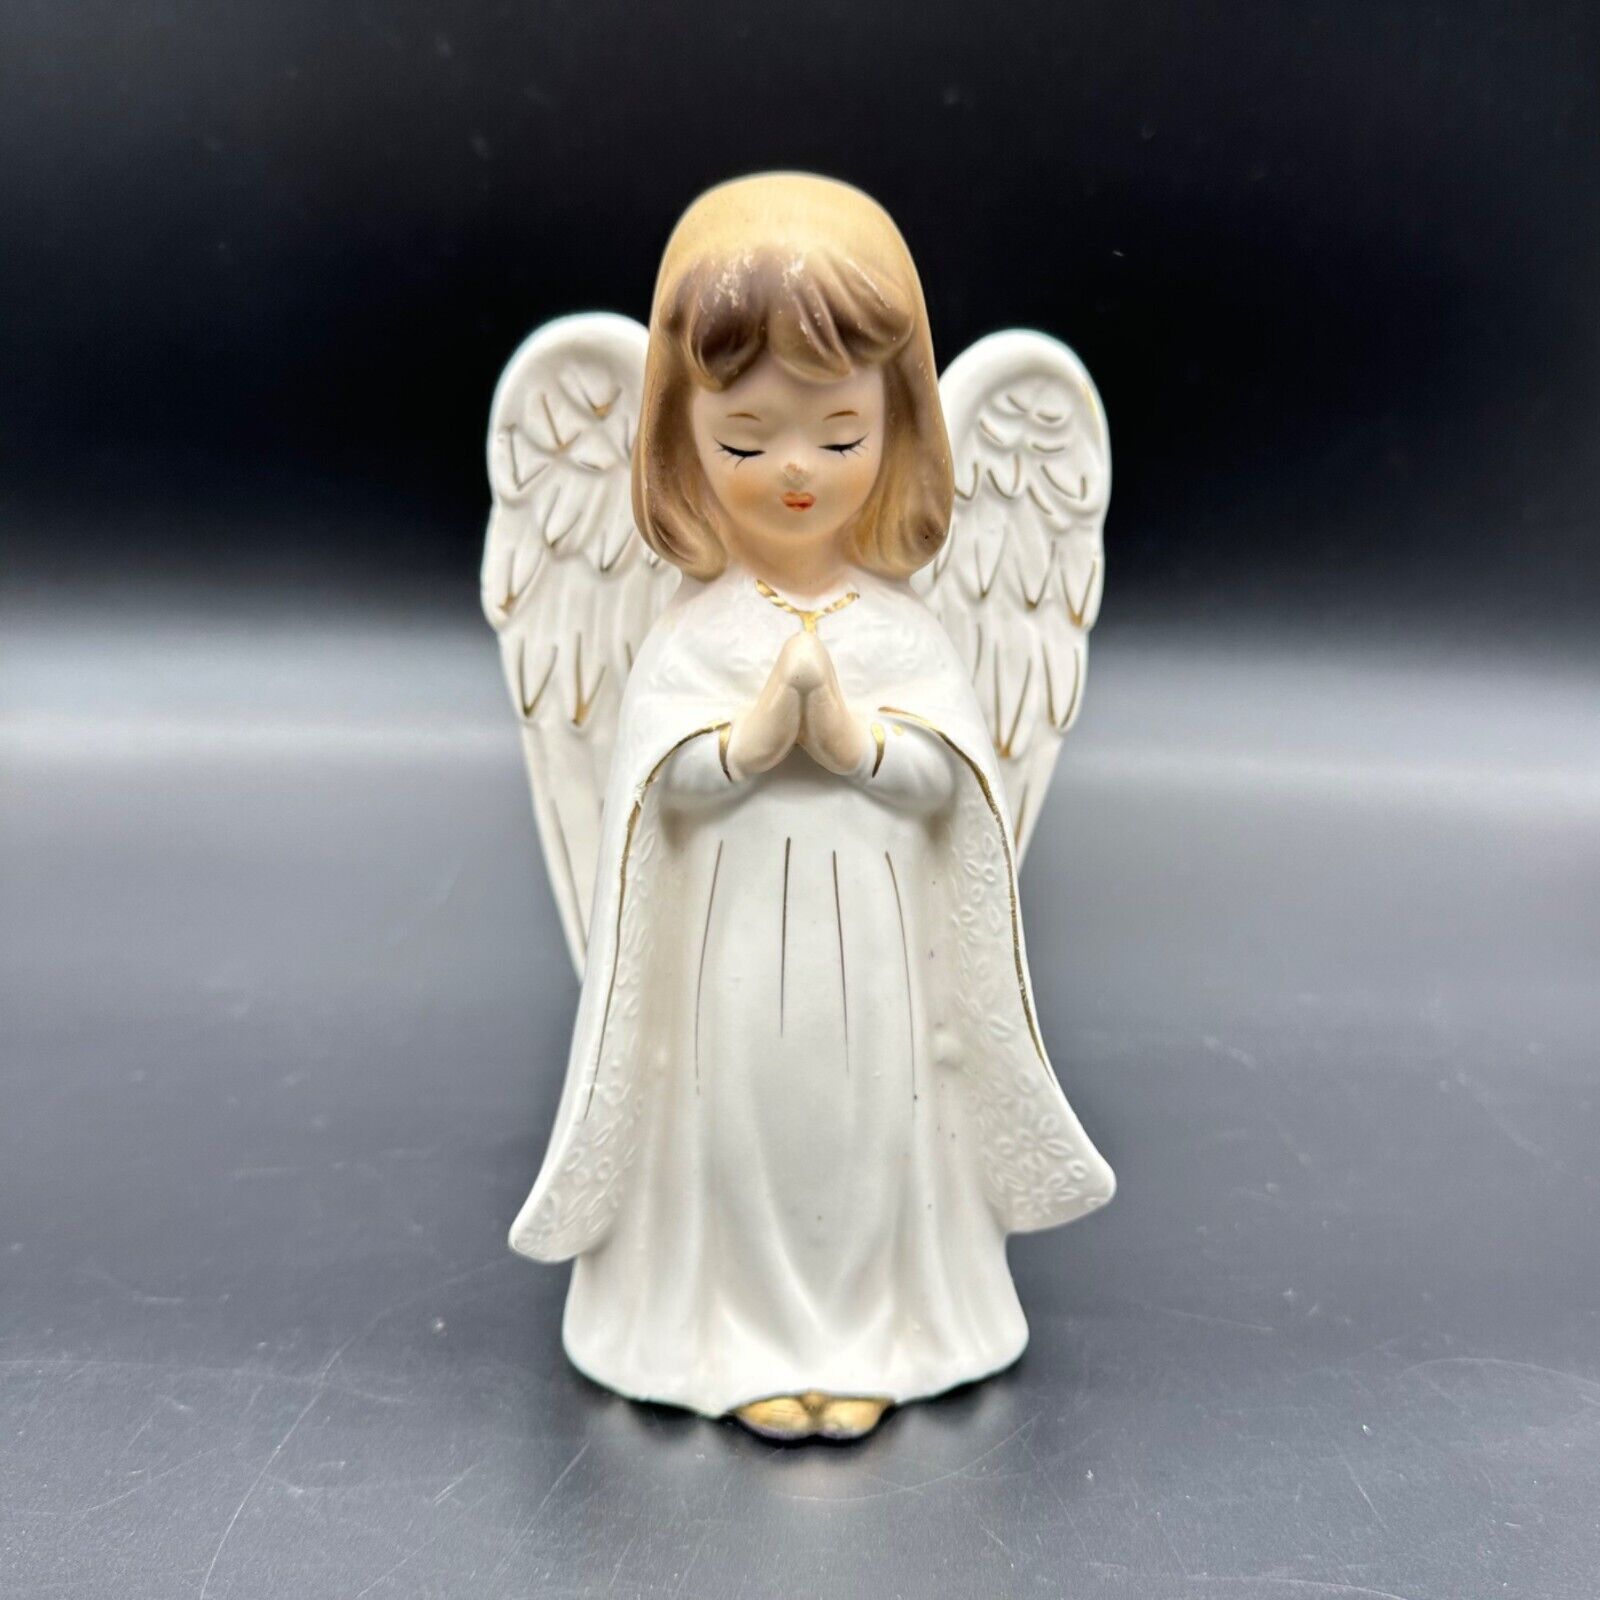 Vintage Angel Figurine Praying Hands Japan Ceramic 1960s Kitschy Girl White